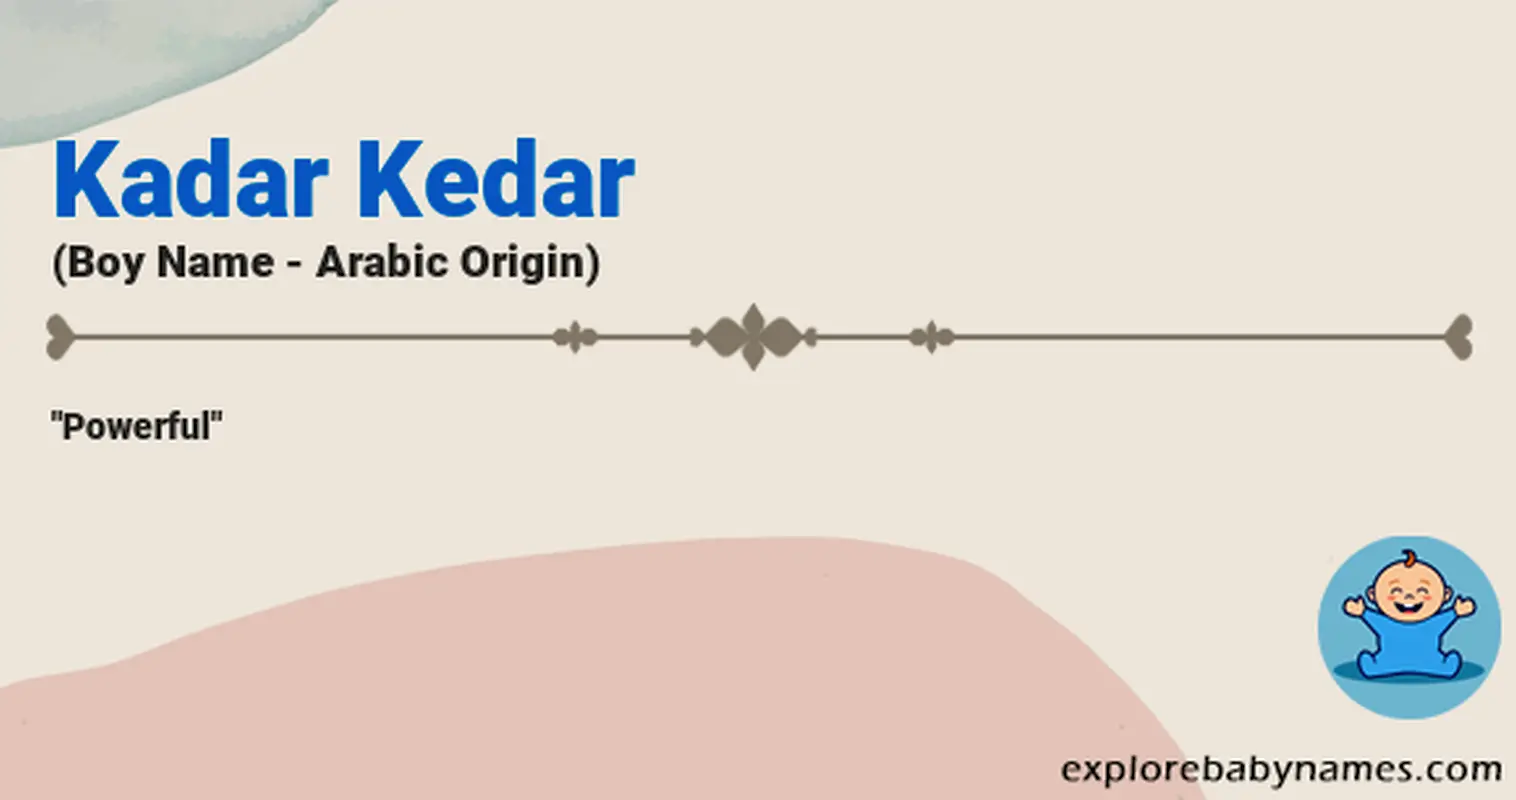 Meaning of Kadar Kedar